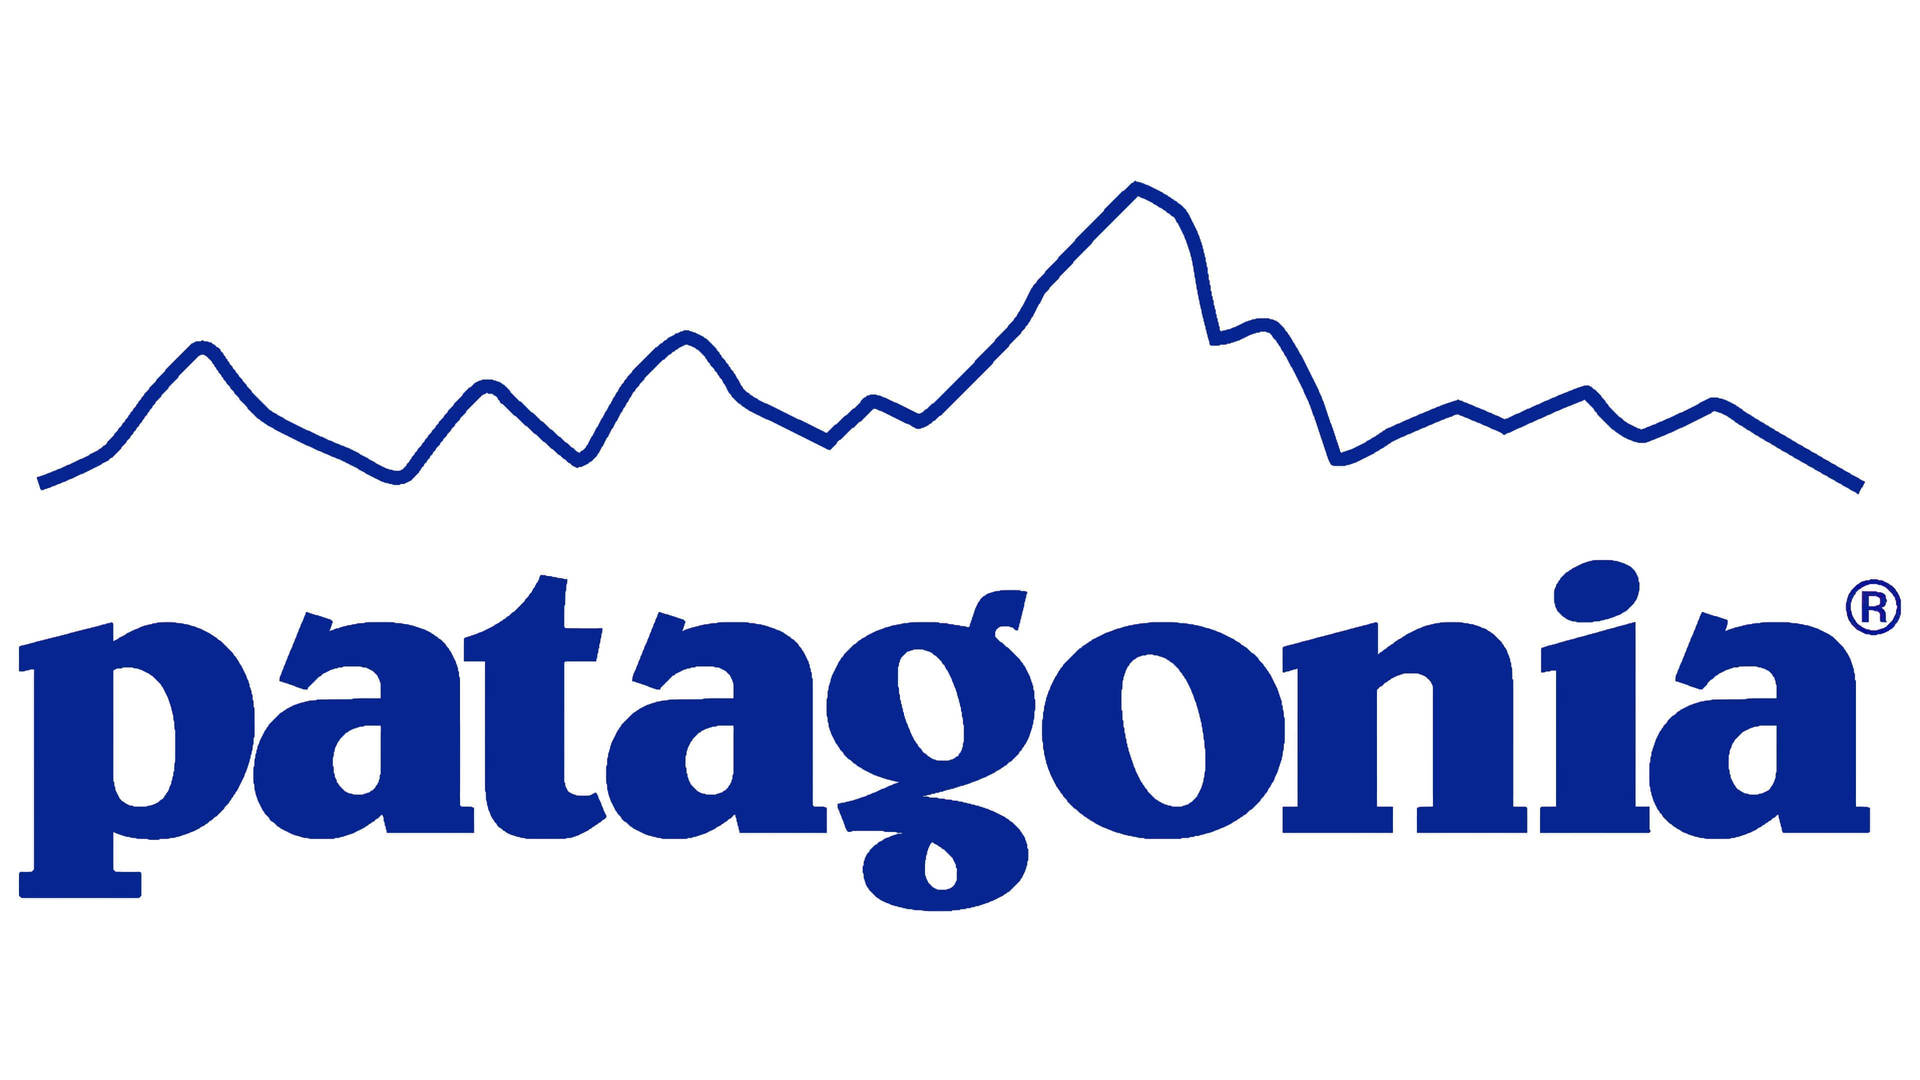 Blauespatagonia-logo Wallpaper